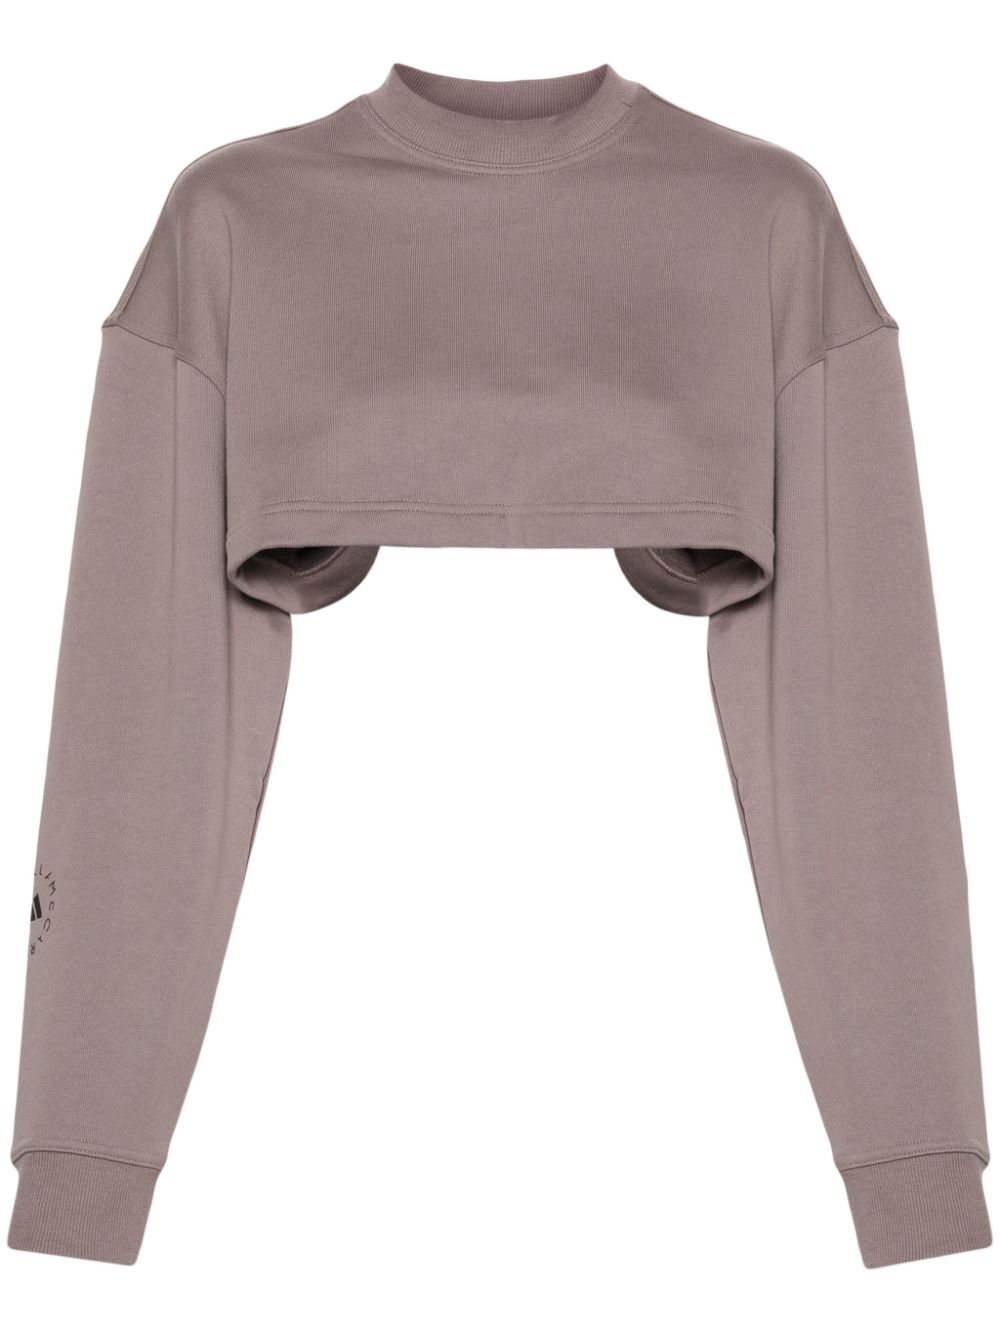 Adidas by Stella McCartney Cropped sweater Beige